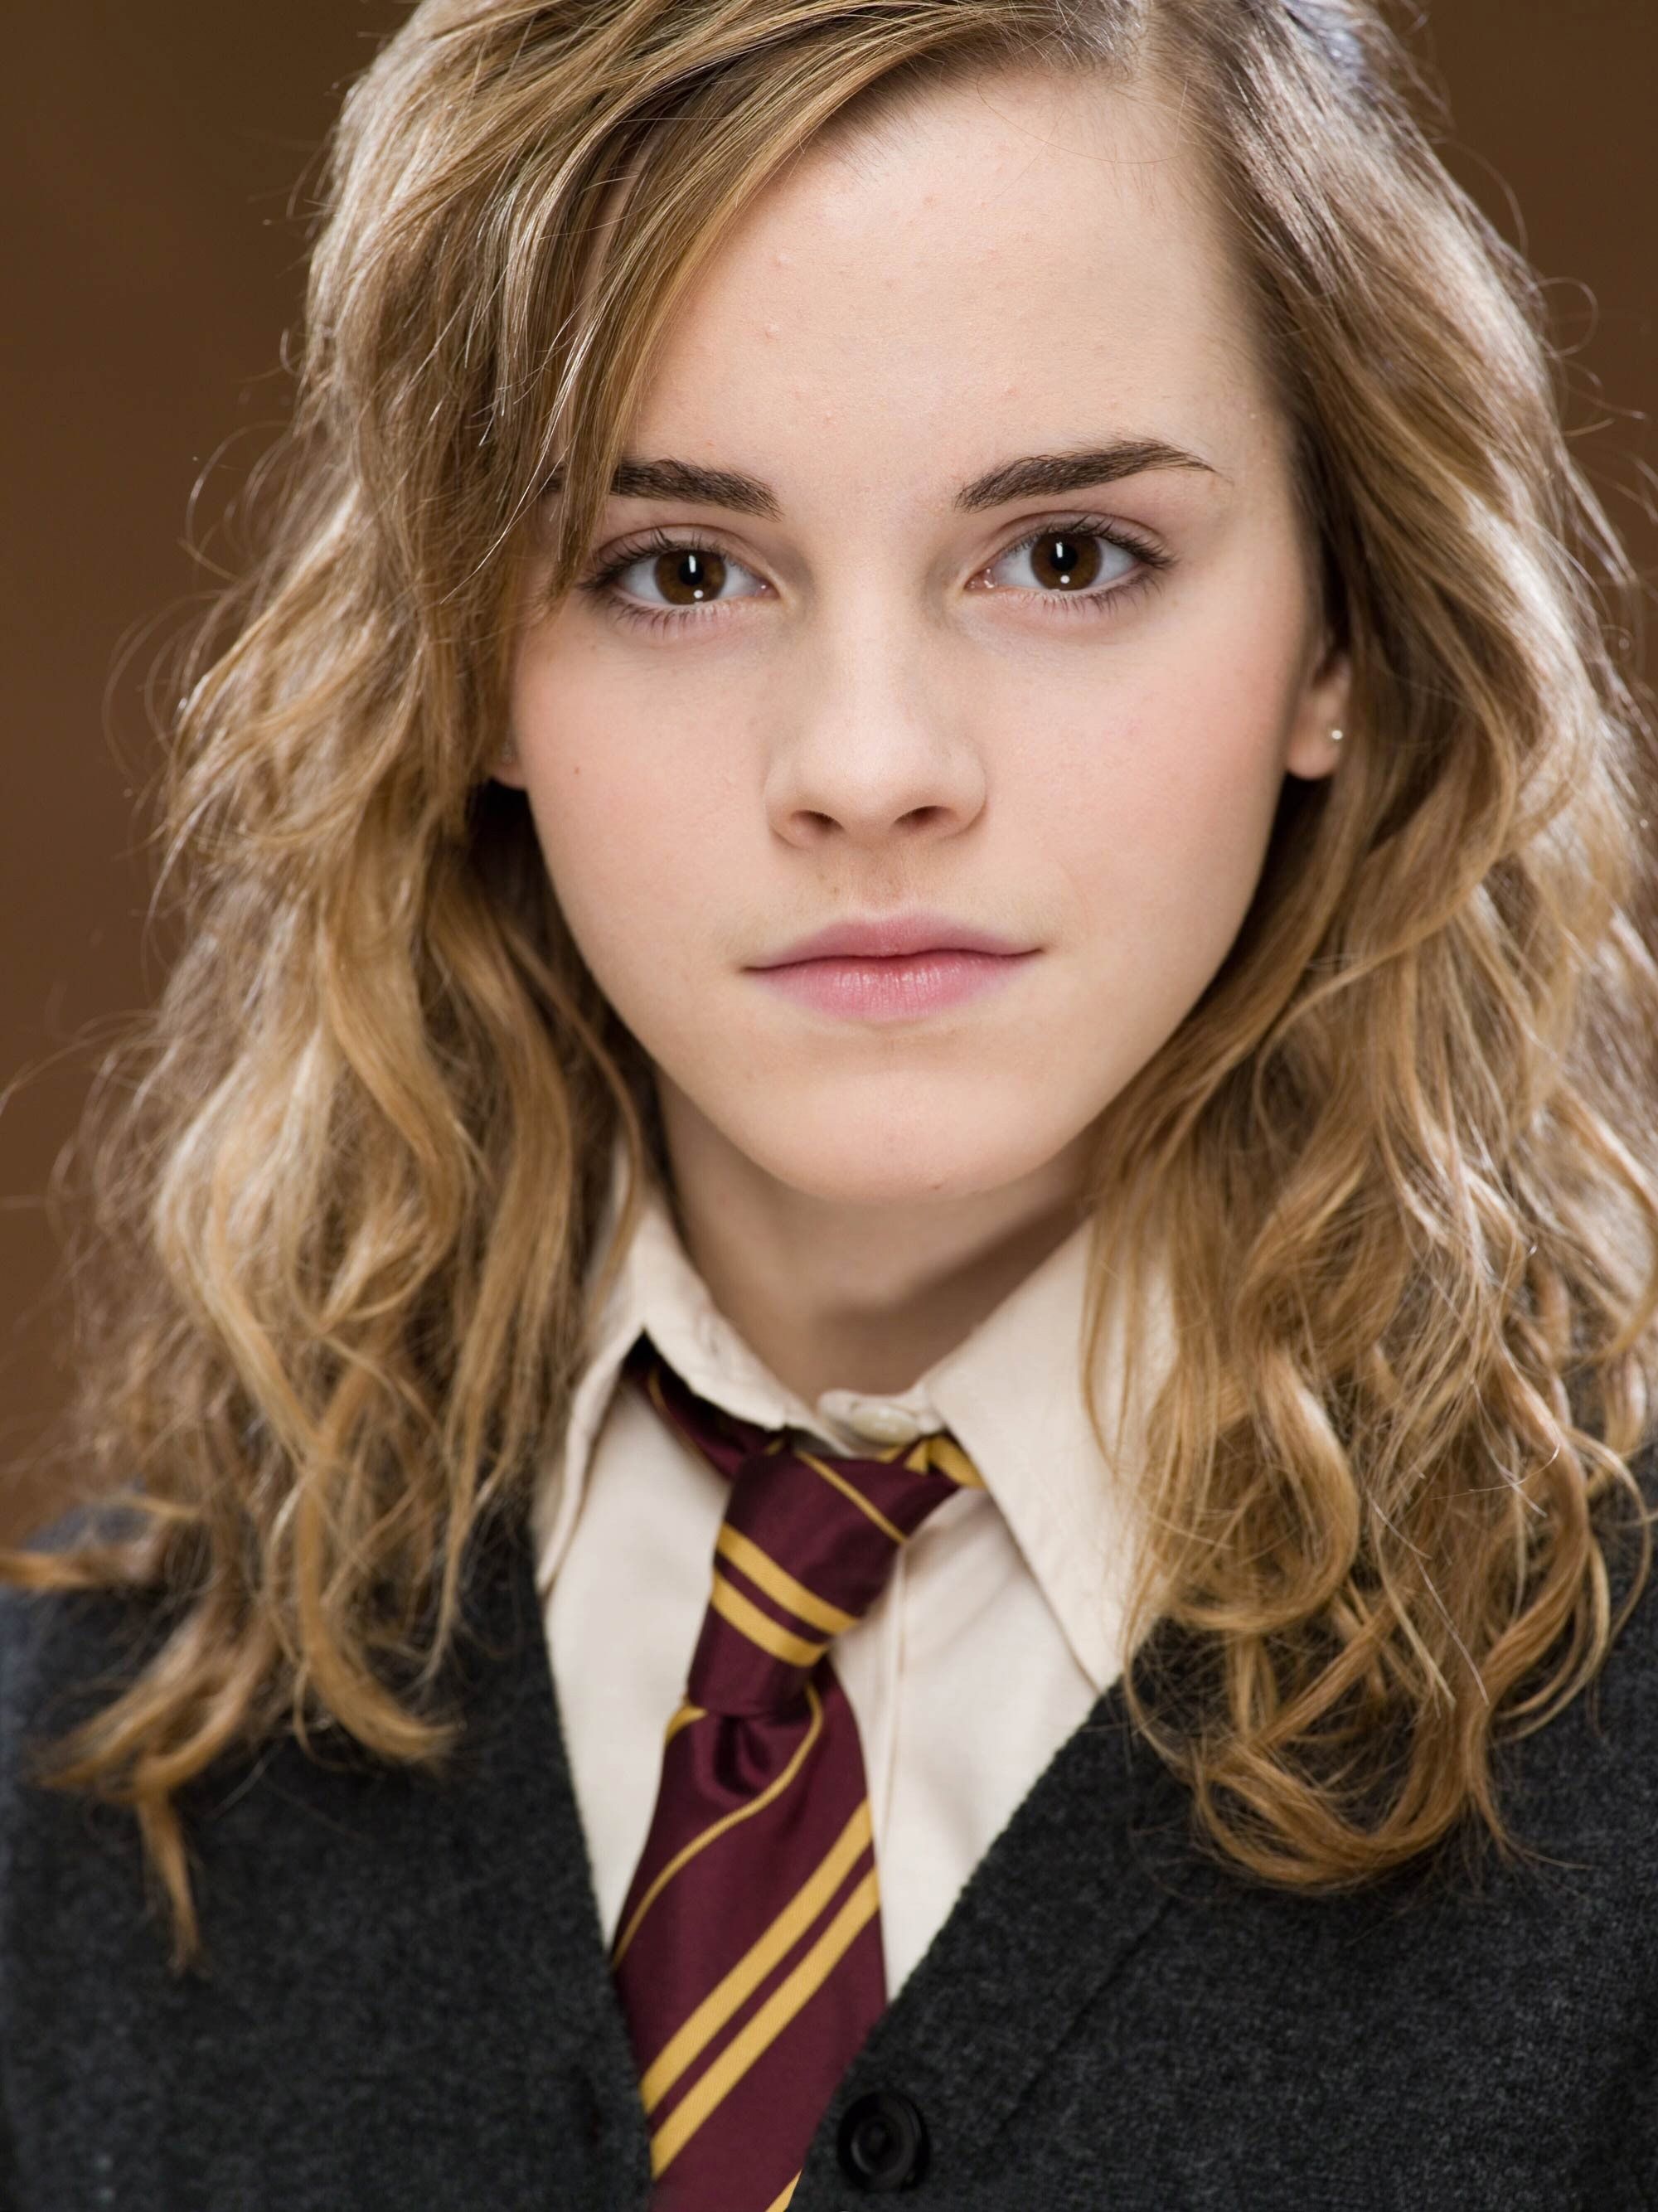 Emma Watson, #tie, #actress, #Hermione Granger, #children, #blonde, #brown eyes, #face, #Harry Potter, wallpaper. Emma watson harry potter, Harry potter characters, Hermione granger costume